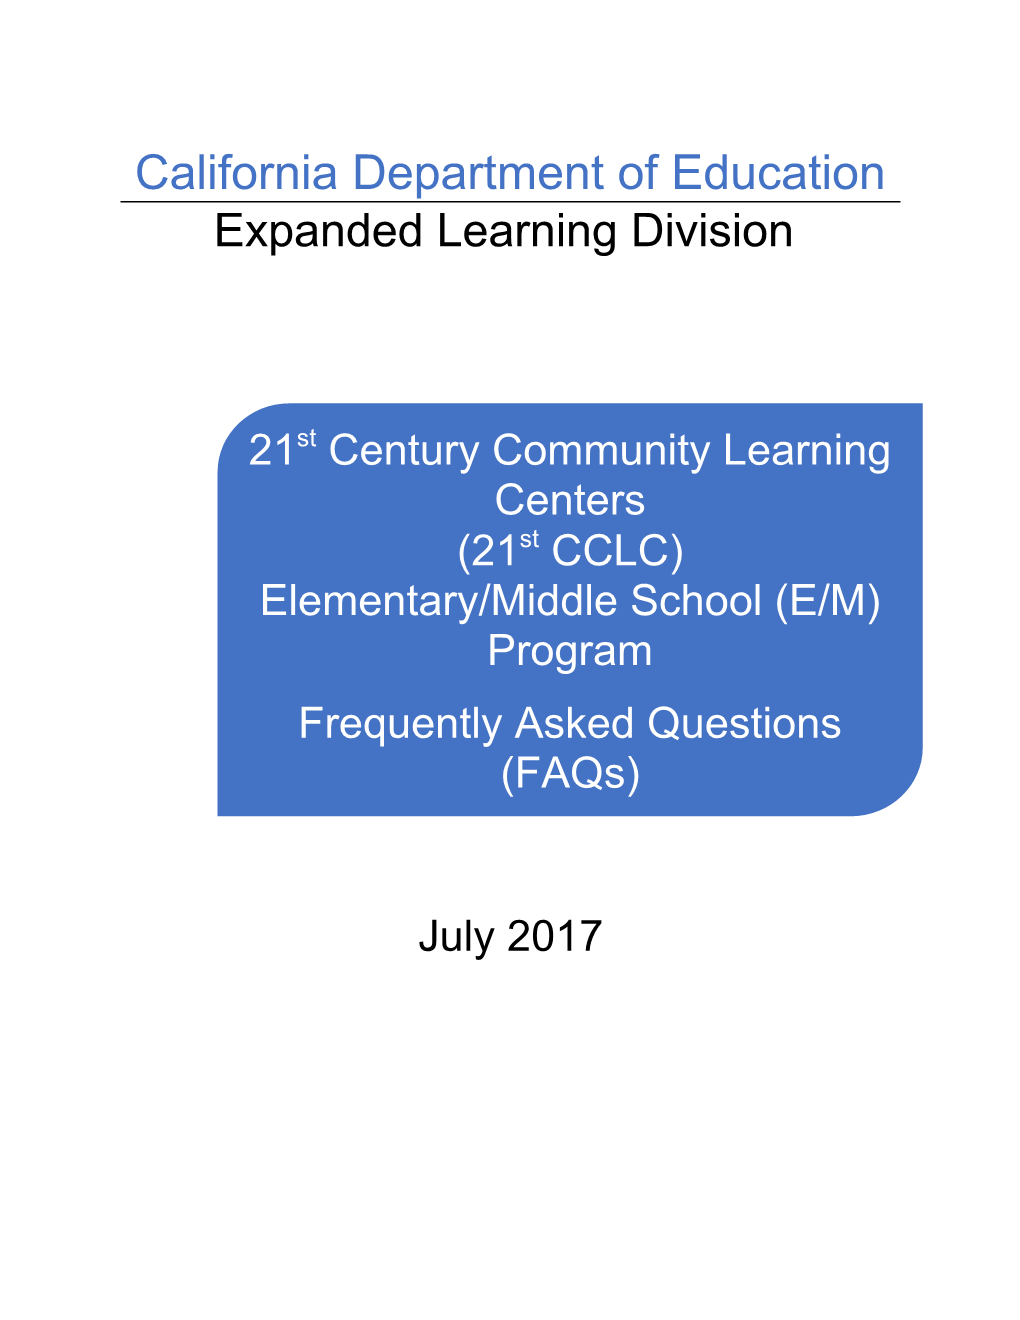 FAQ School Programs - 21St Century Community Learning Centers (CA Dept of Education)